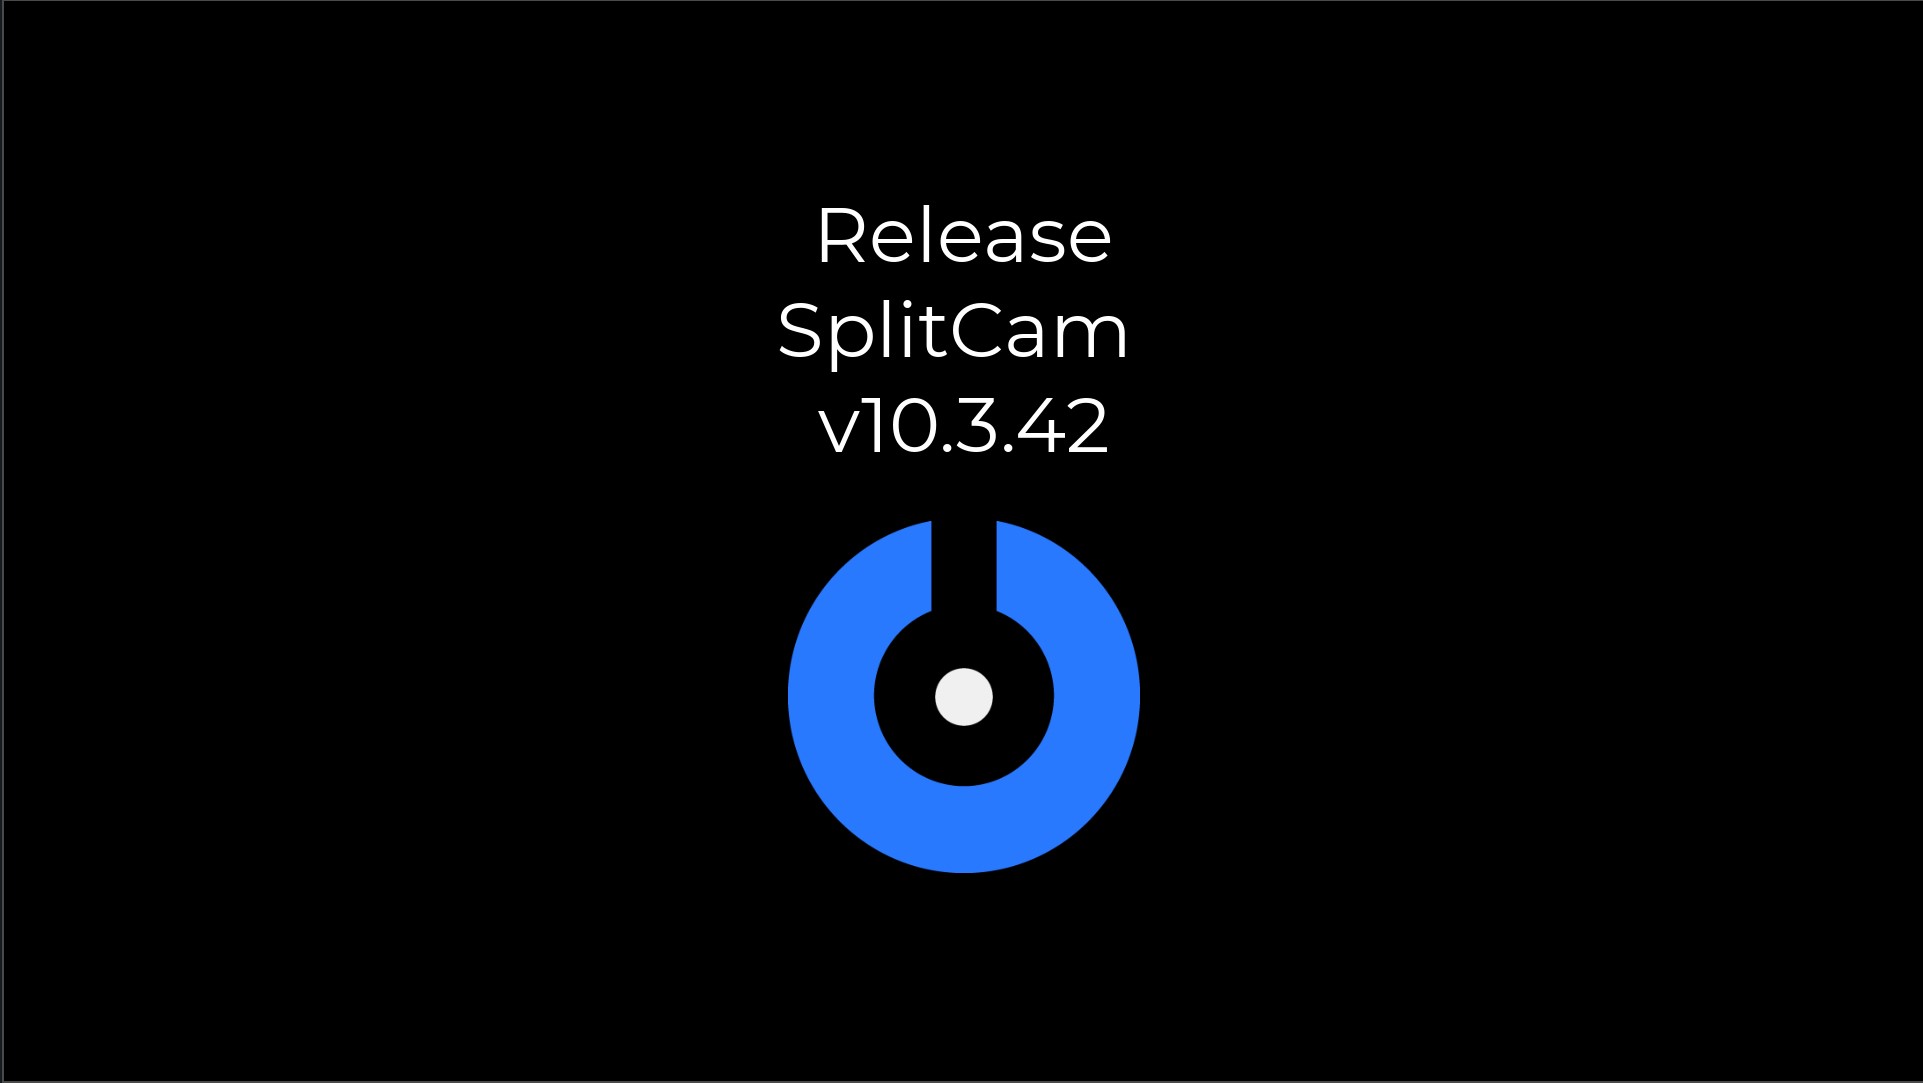 SplitCam 10.7.11 download the new